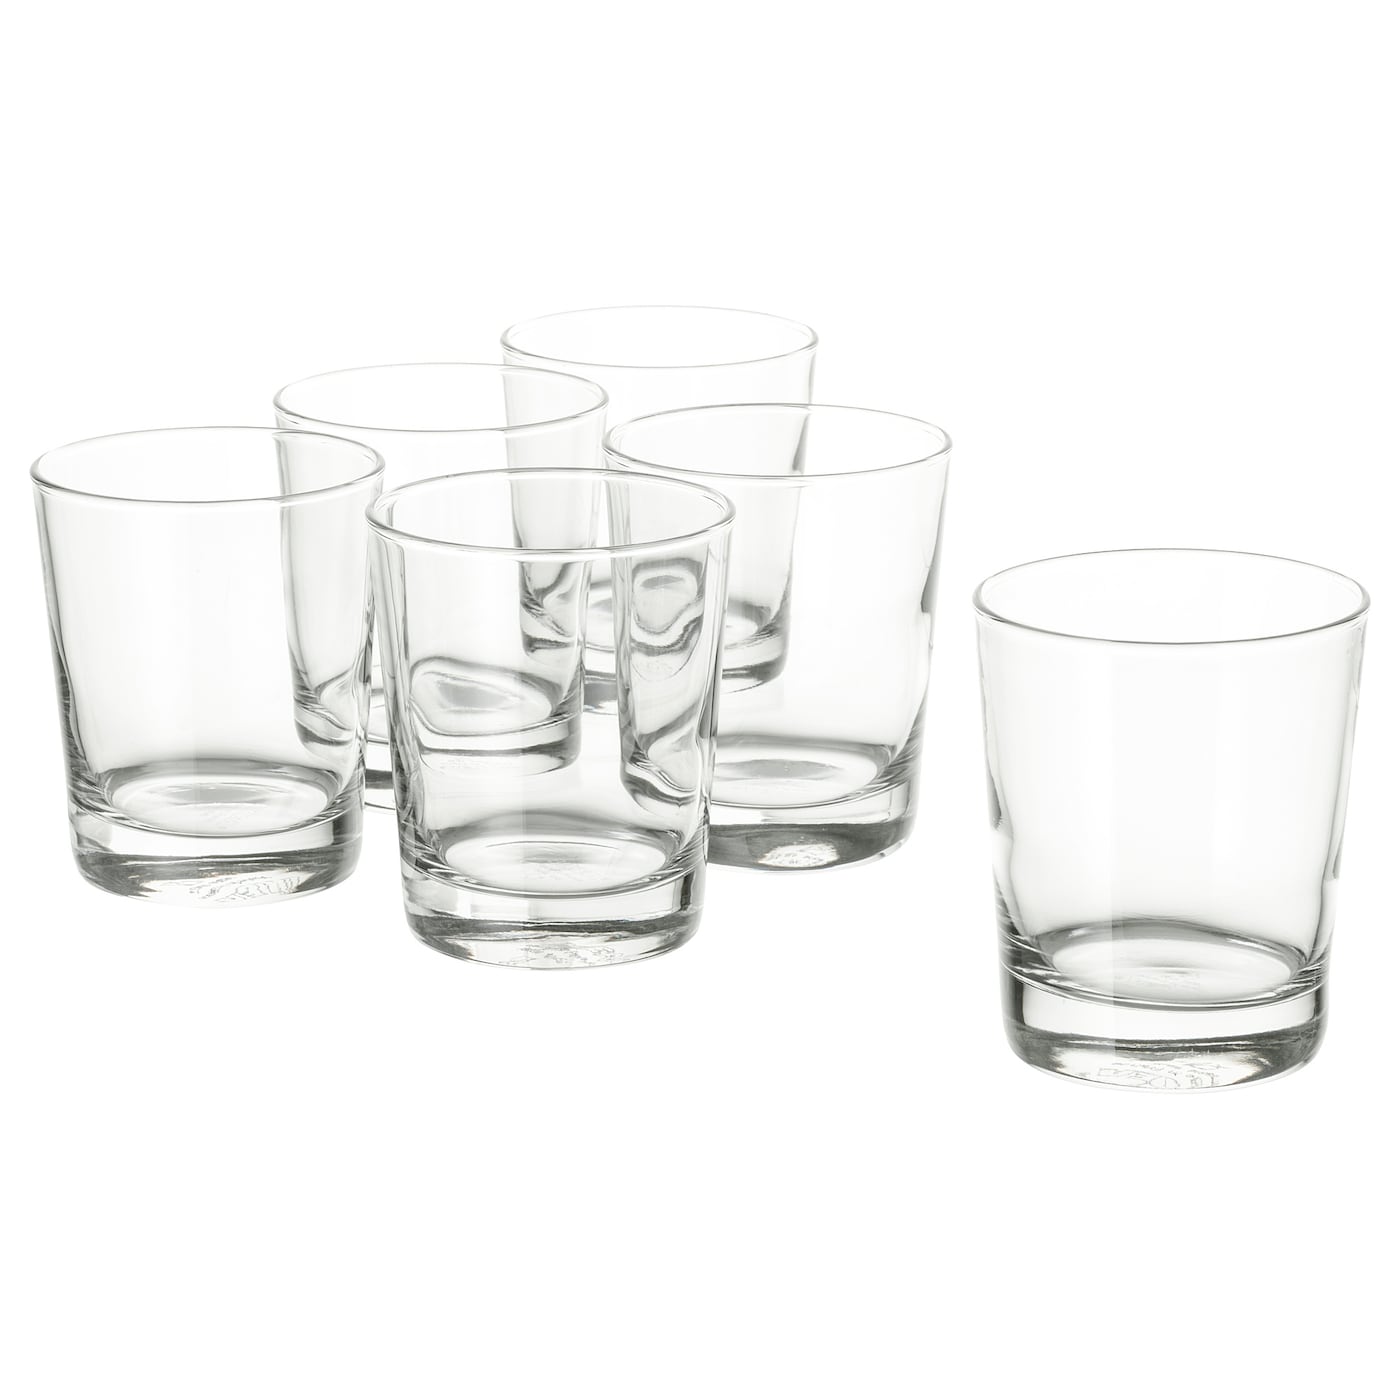 Набор стаканов, 6 шт. -IKEA GODIS, 230 мл, прозрачное стекло, ГОДИС ИКЕА